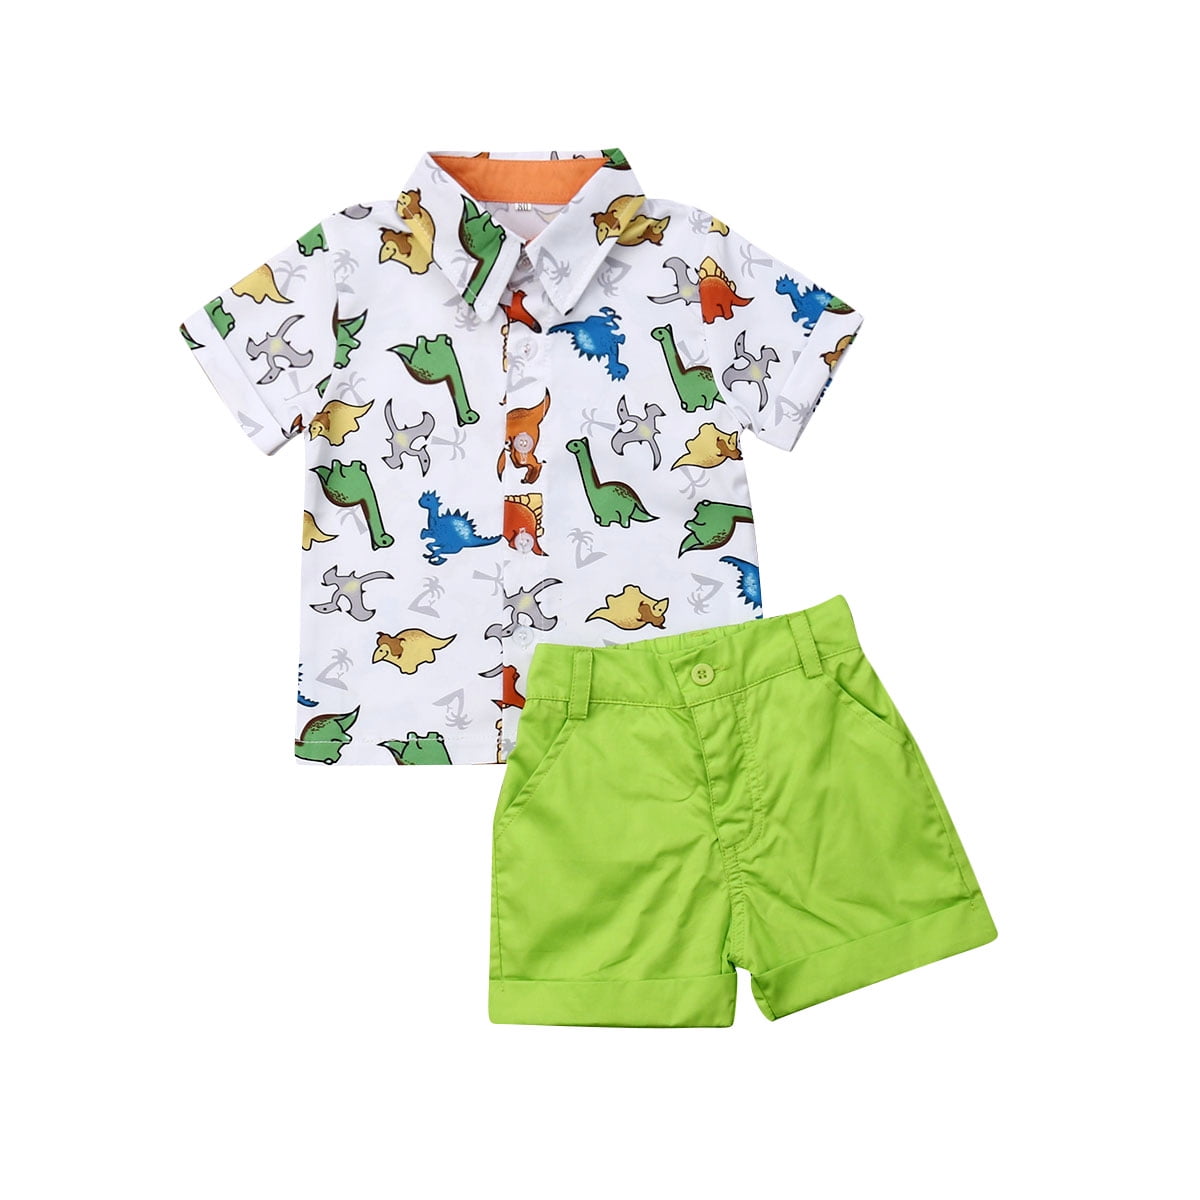 Toddler Boy Shirt Suit Animal Dinosaur Print Short Sleeve Button Shirt Clothes Set Gentleman Clothes Shorts 2 Piece Outfits for Summer 